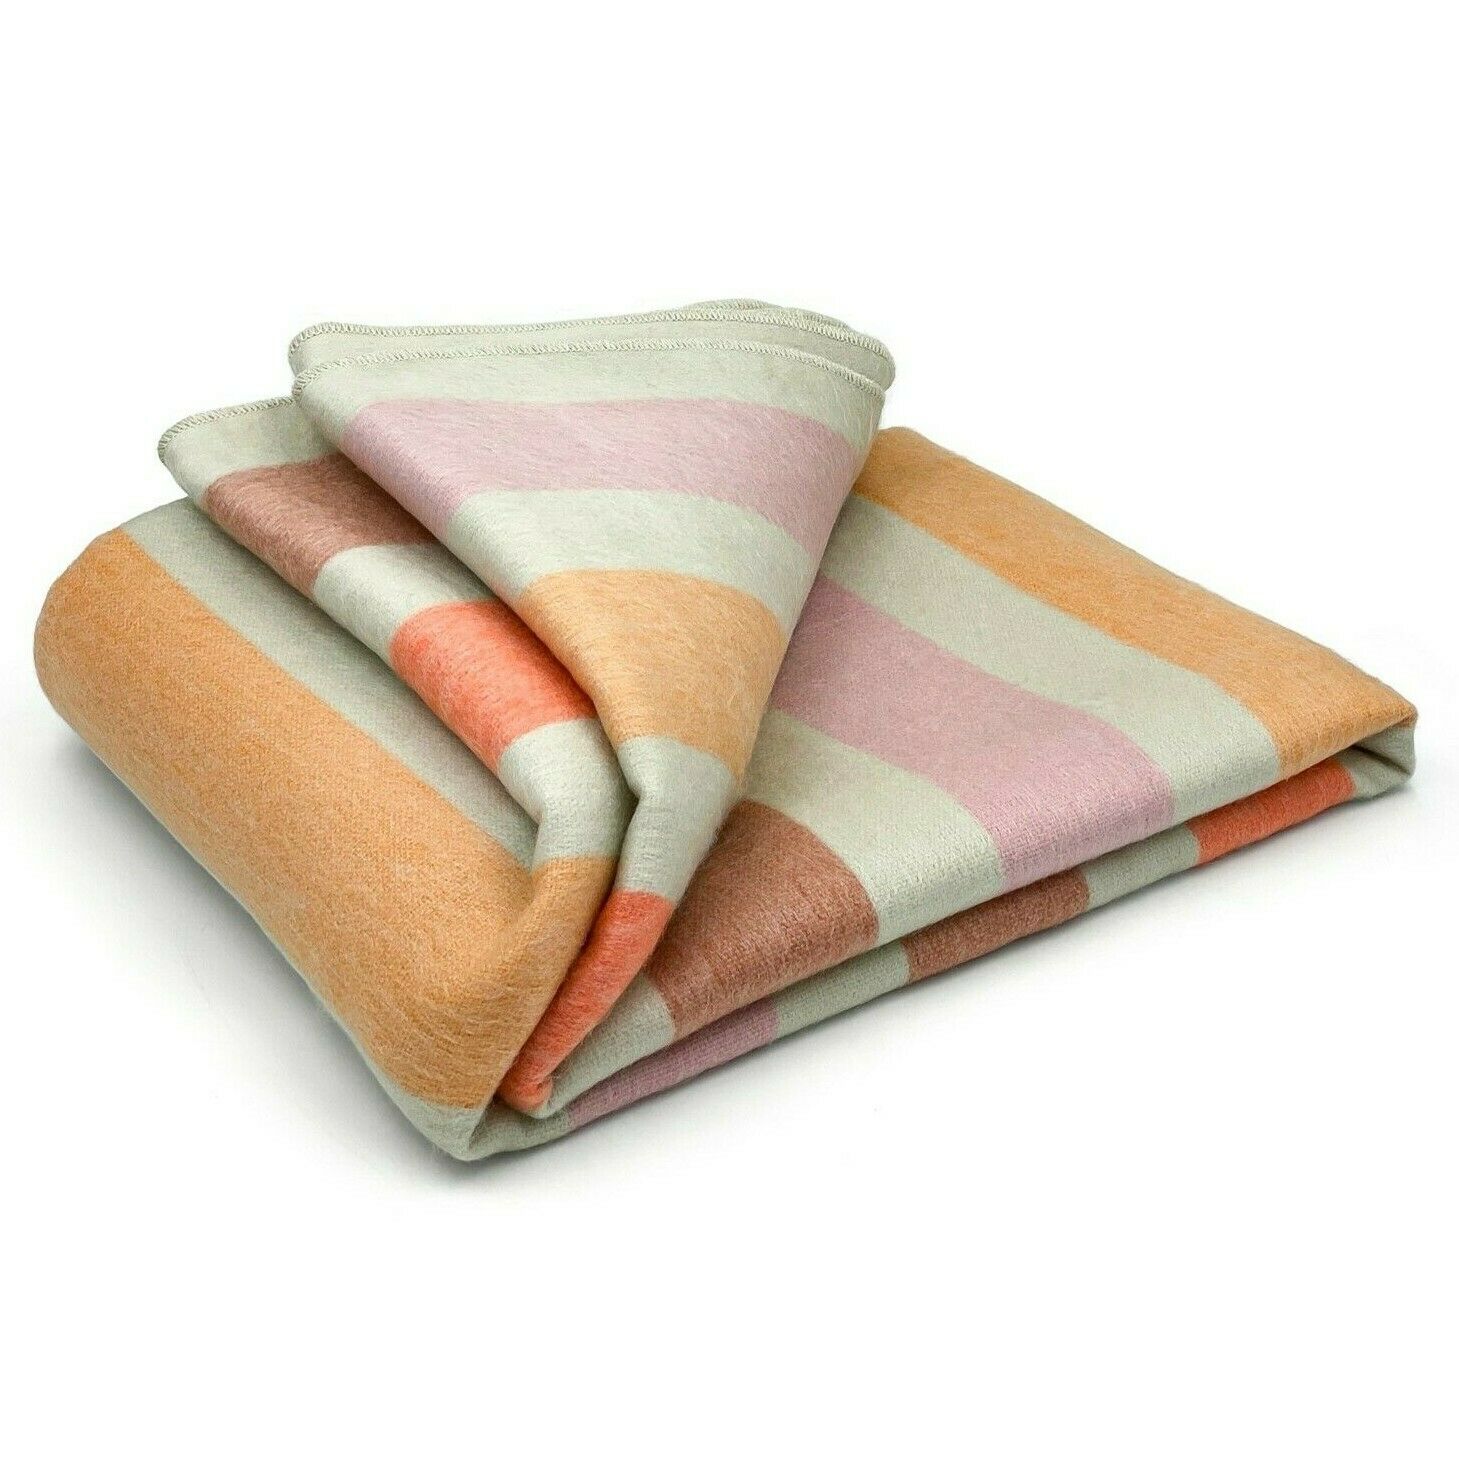 Lloa - Baby Alpaca Wool Throw Blanket / Sofa Cover - Queen 95" x 66" - striped cream/soft pink/carrot/orange/mocha